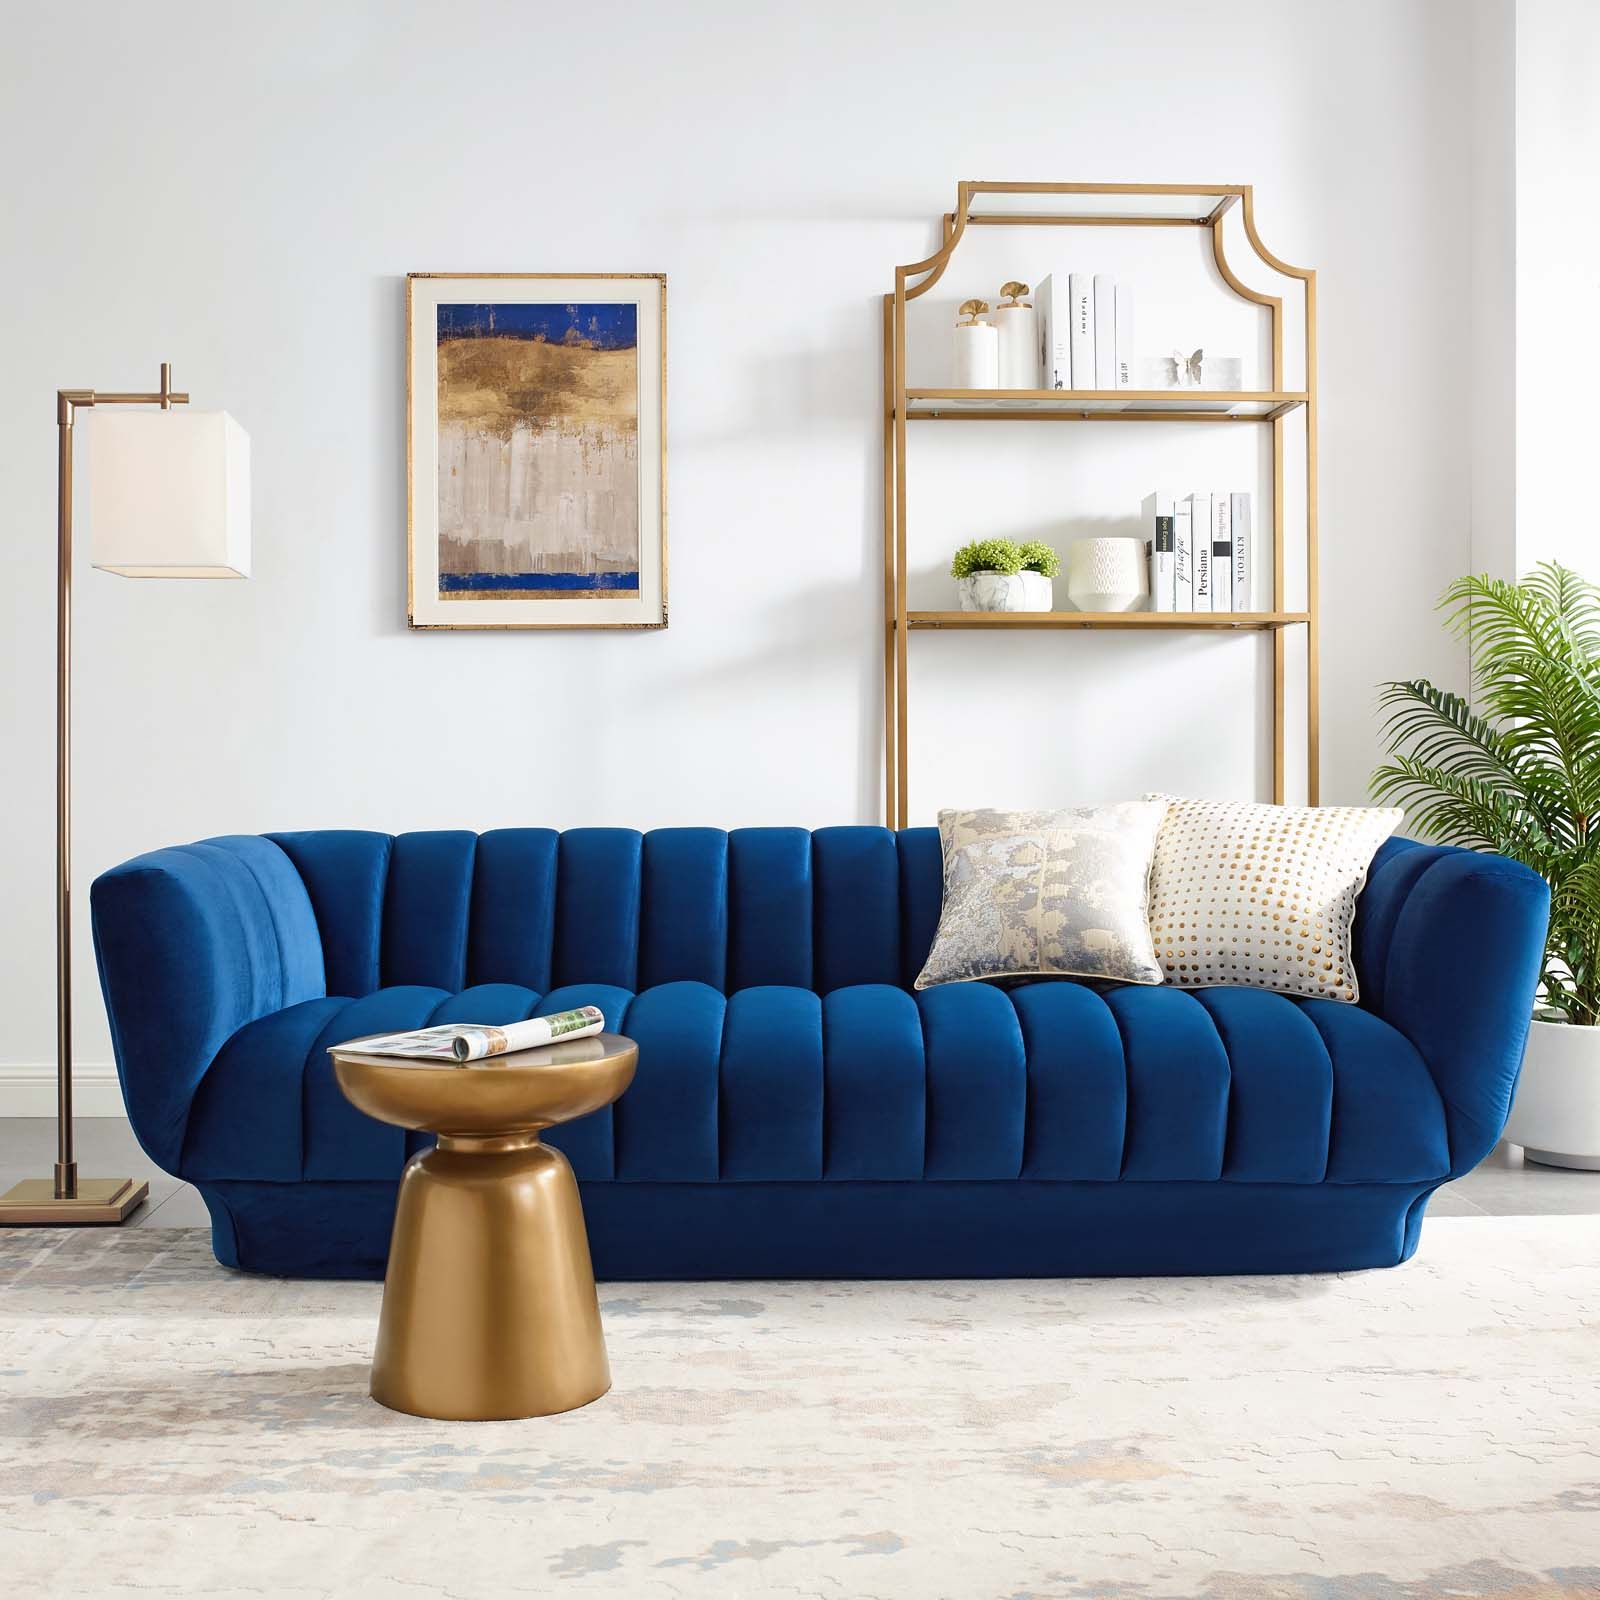 Beige Velvet Tufted Sofa – Get Inspired With Our Curated Ideas For Inside Elegant Beige Velvet Sofas (View 20 of 20)